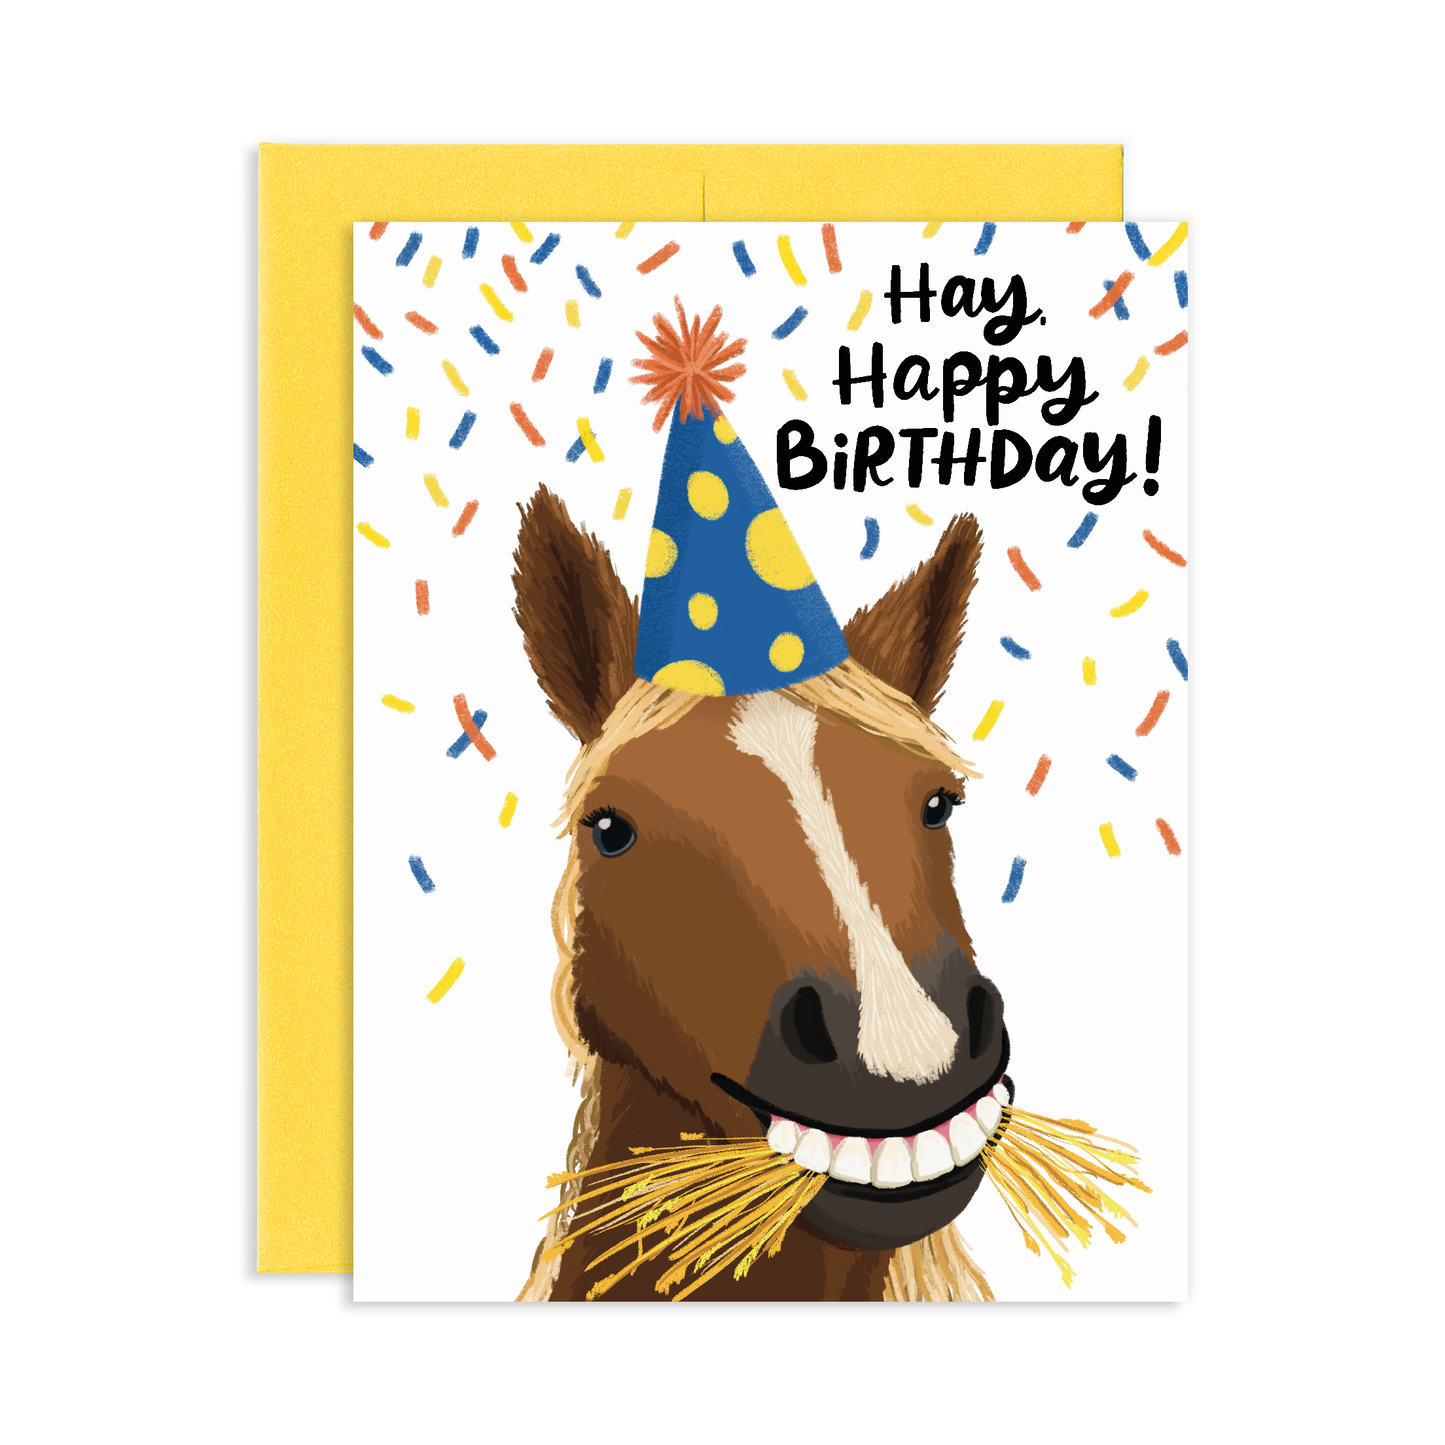 Hay Horse Birthday Greeting Card